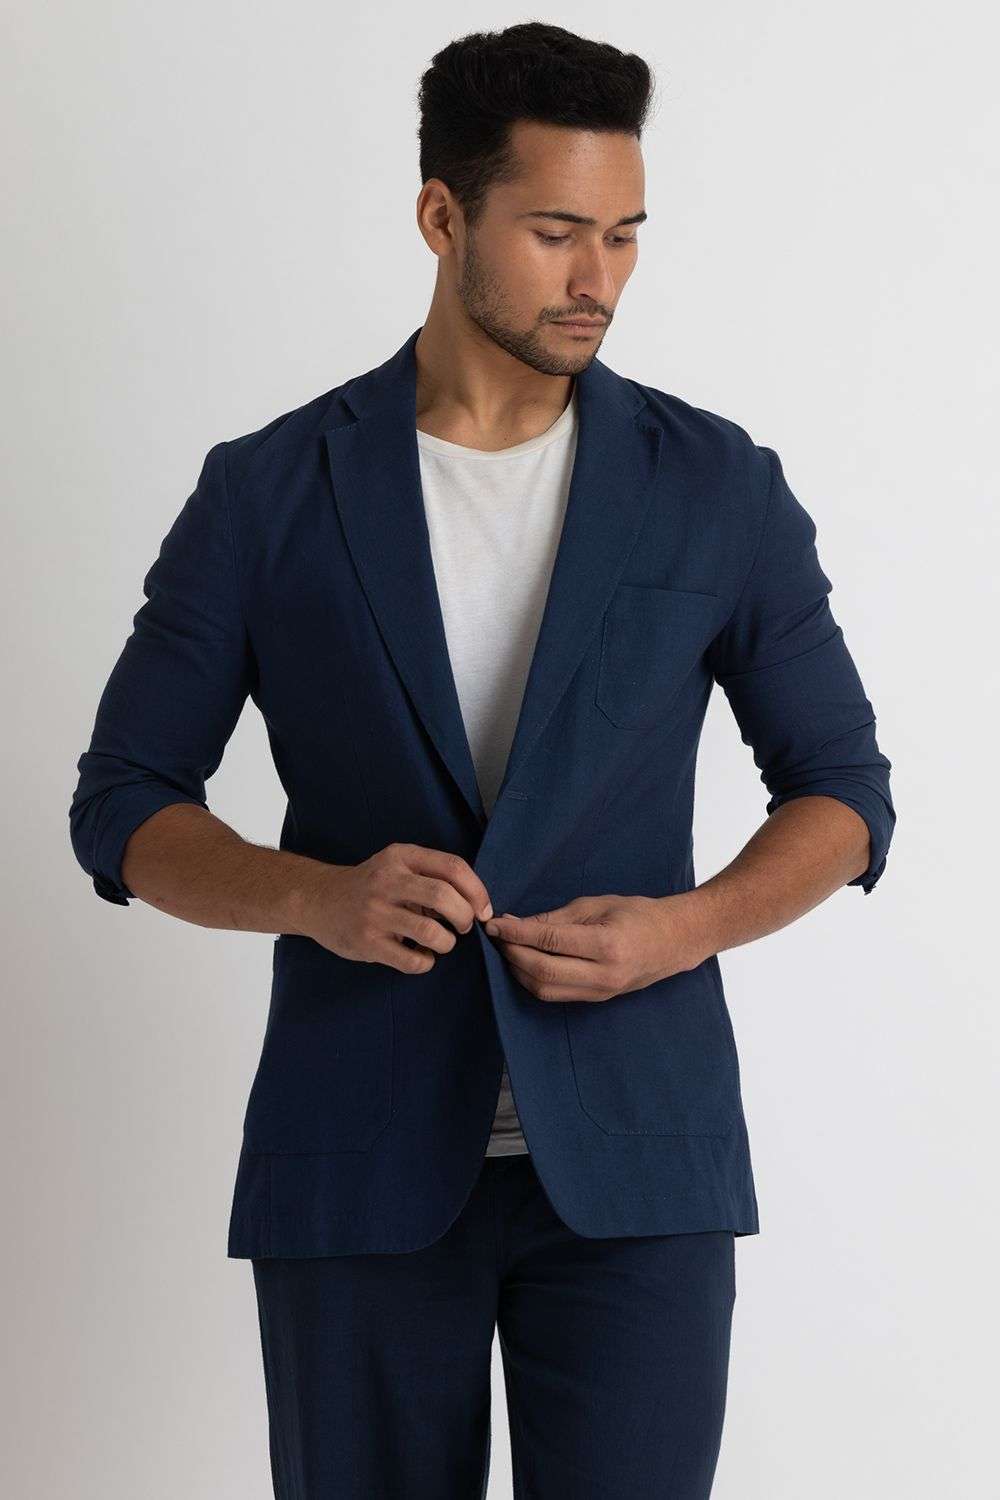 9 Ways to Wear a Navy Blazer | Peter Manning NYC | Blue blazer outfit,  Light blue dress shirt, Dark blue blazer